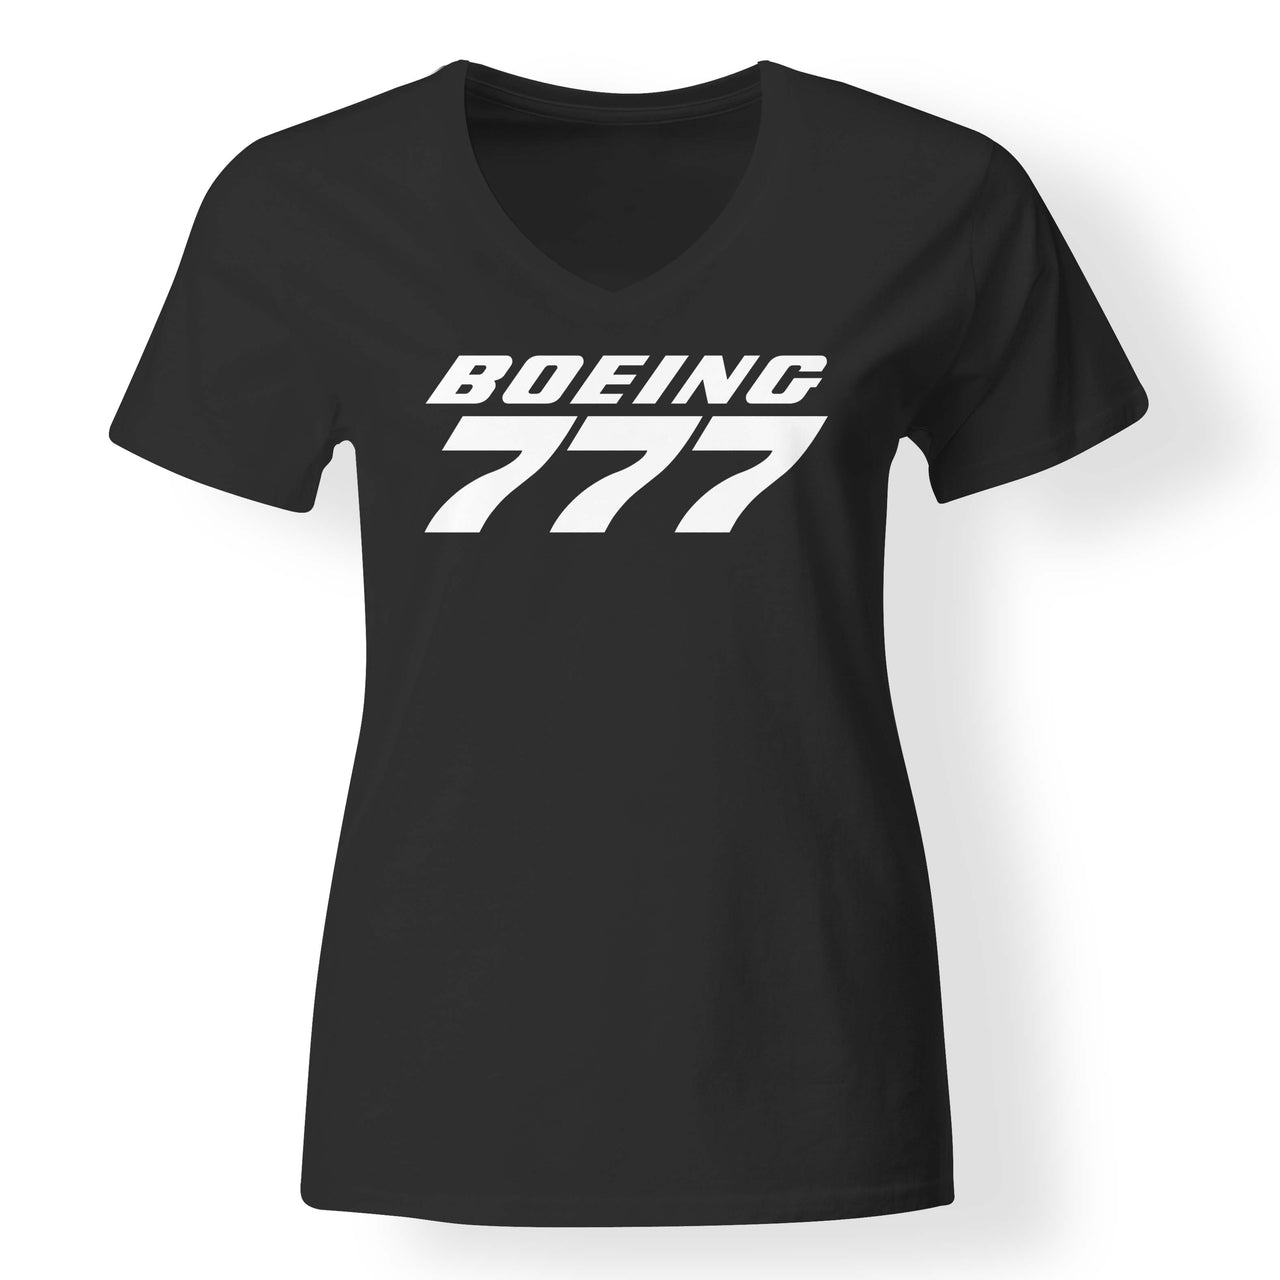 Boeing 777 & Text Designed V-Neck T-Shirts